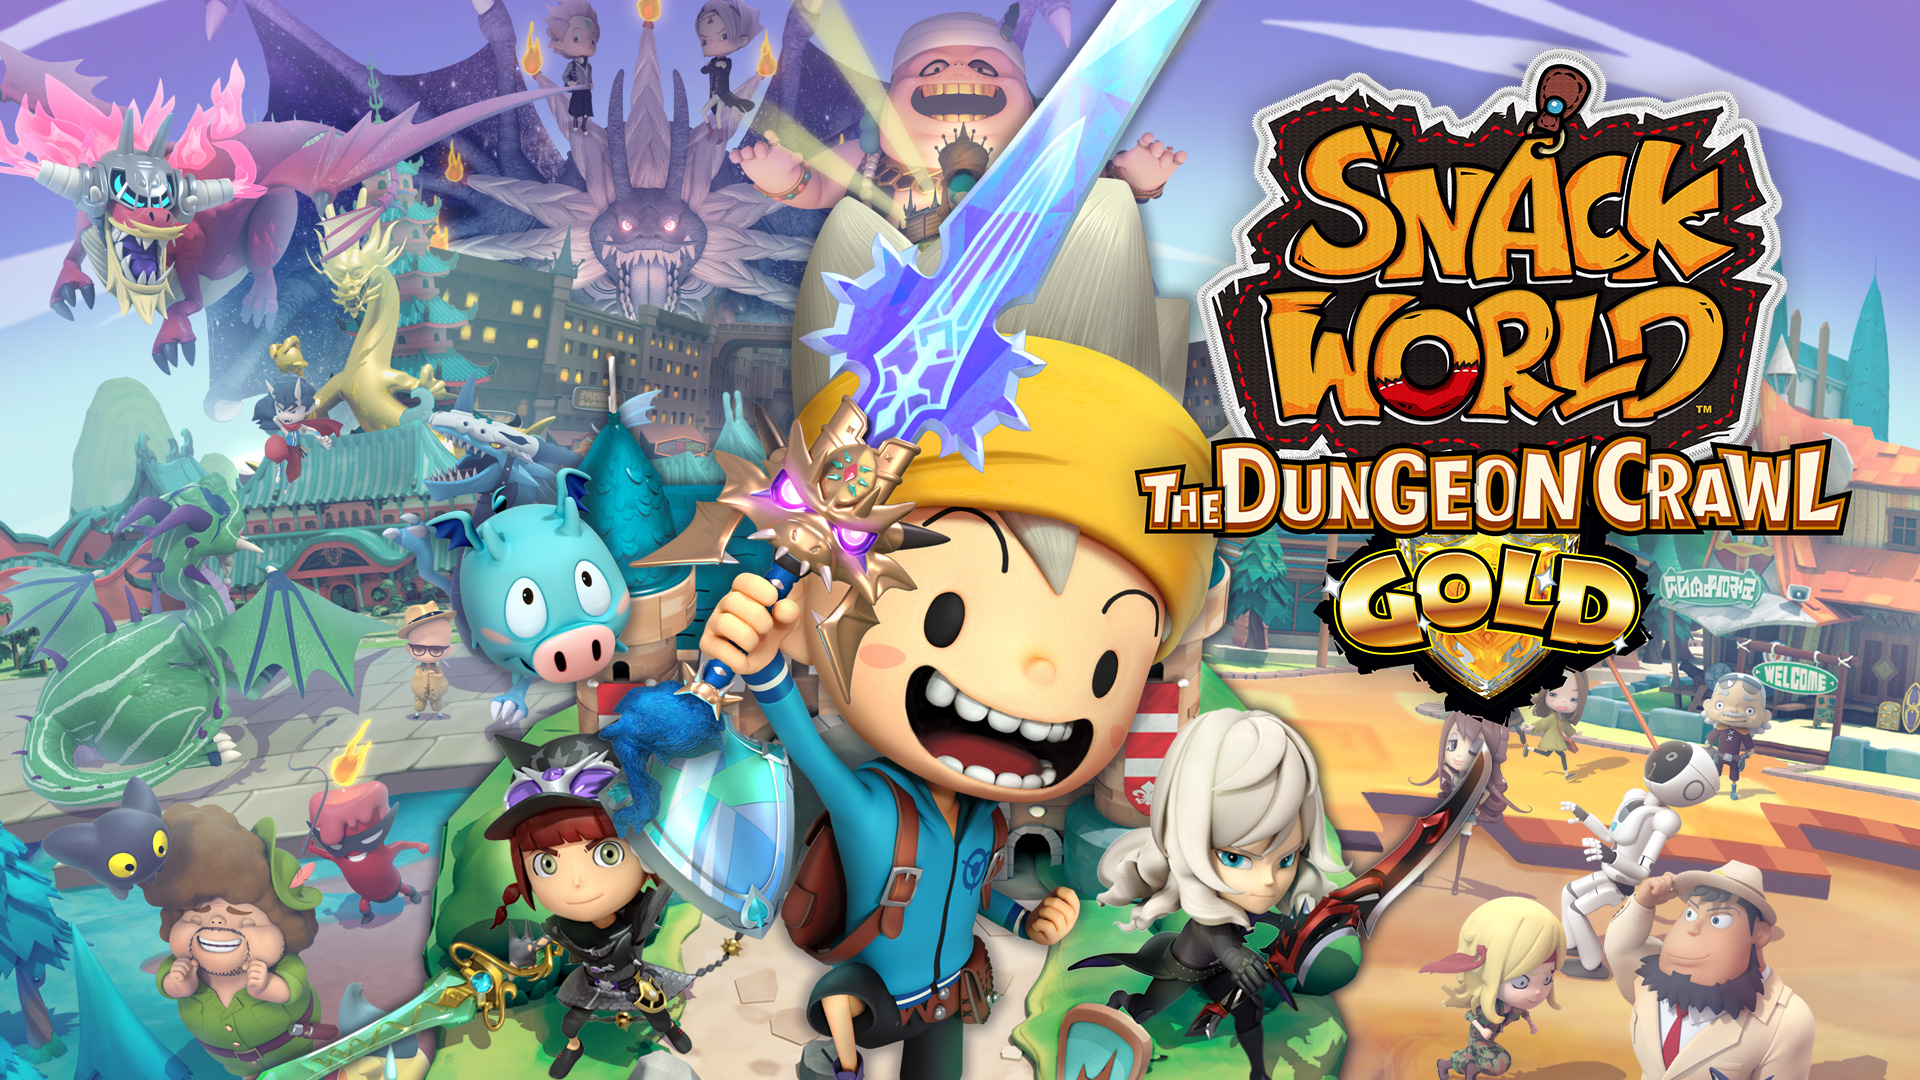 snack-world-the-dungeon-crawl-gold-nintendo-switch-games-nintendo